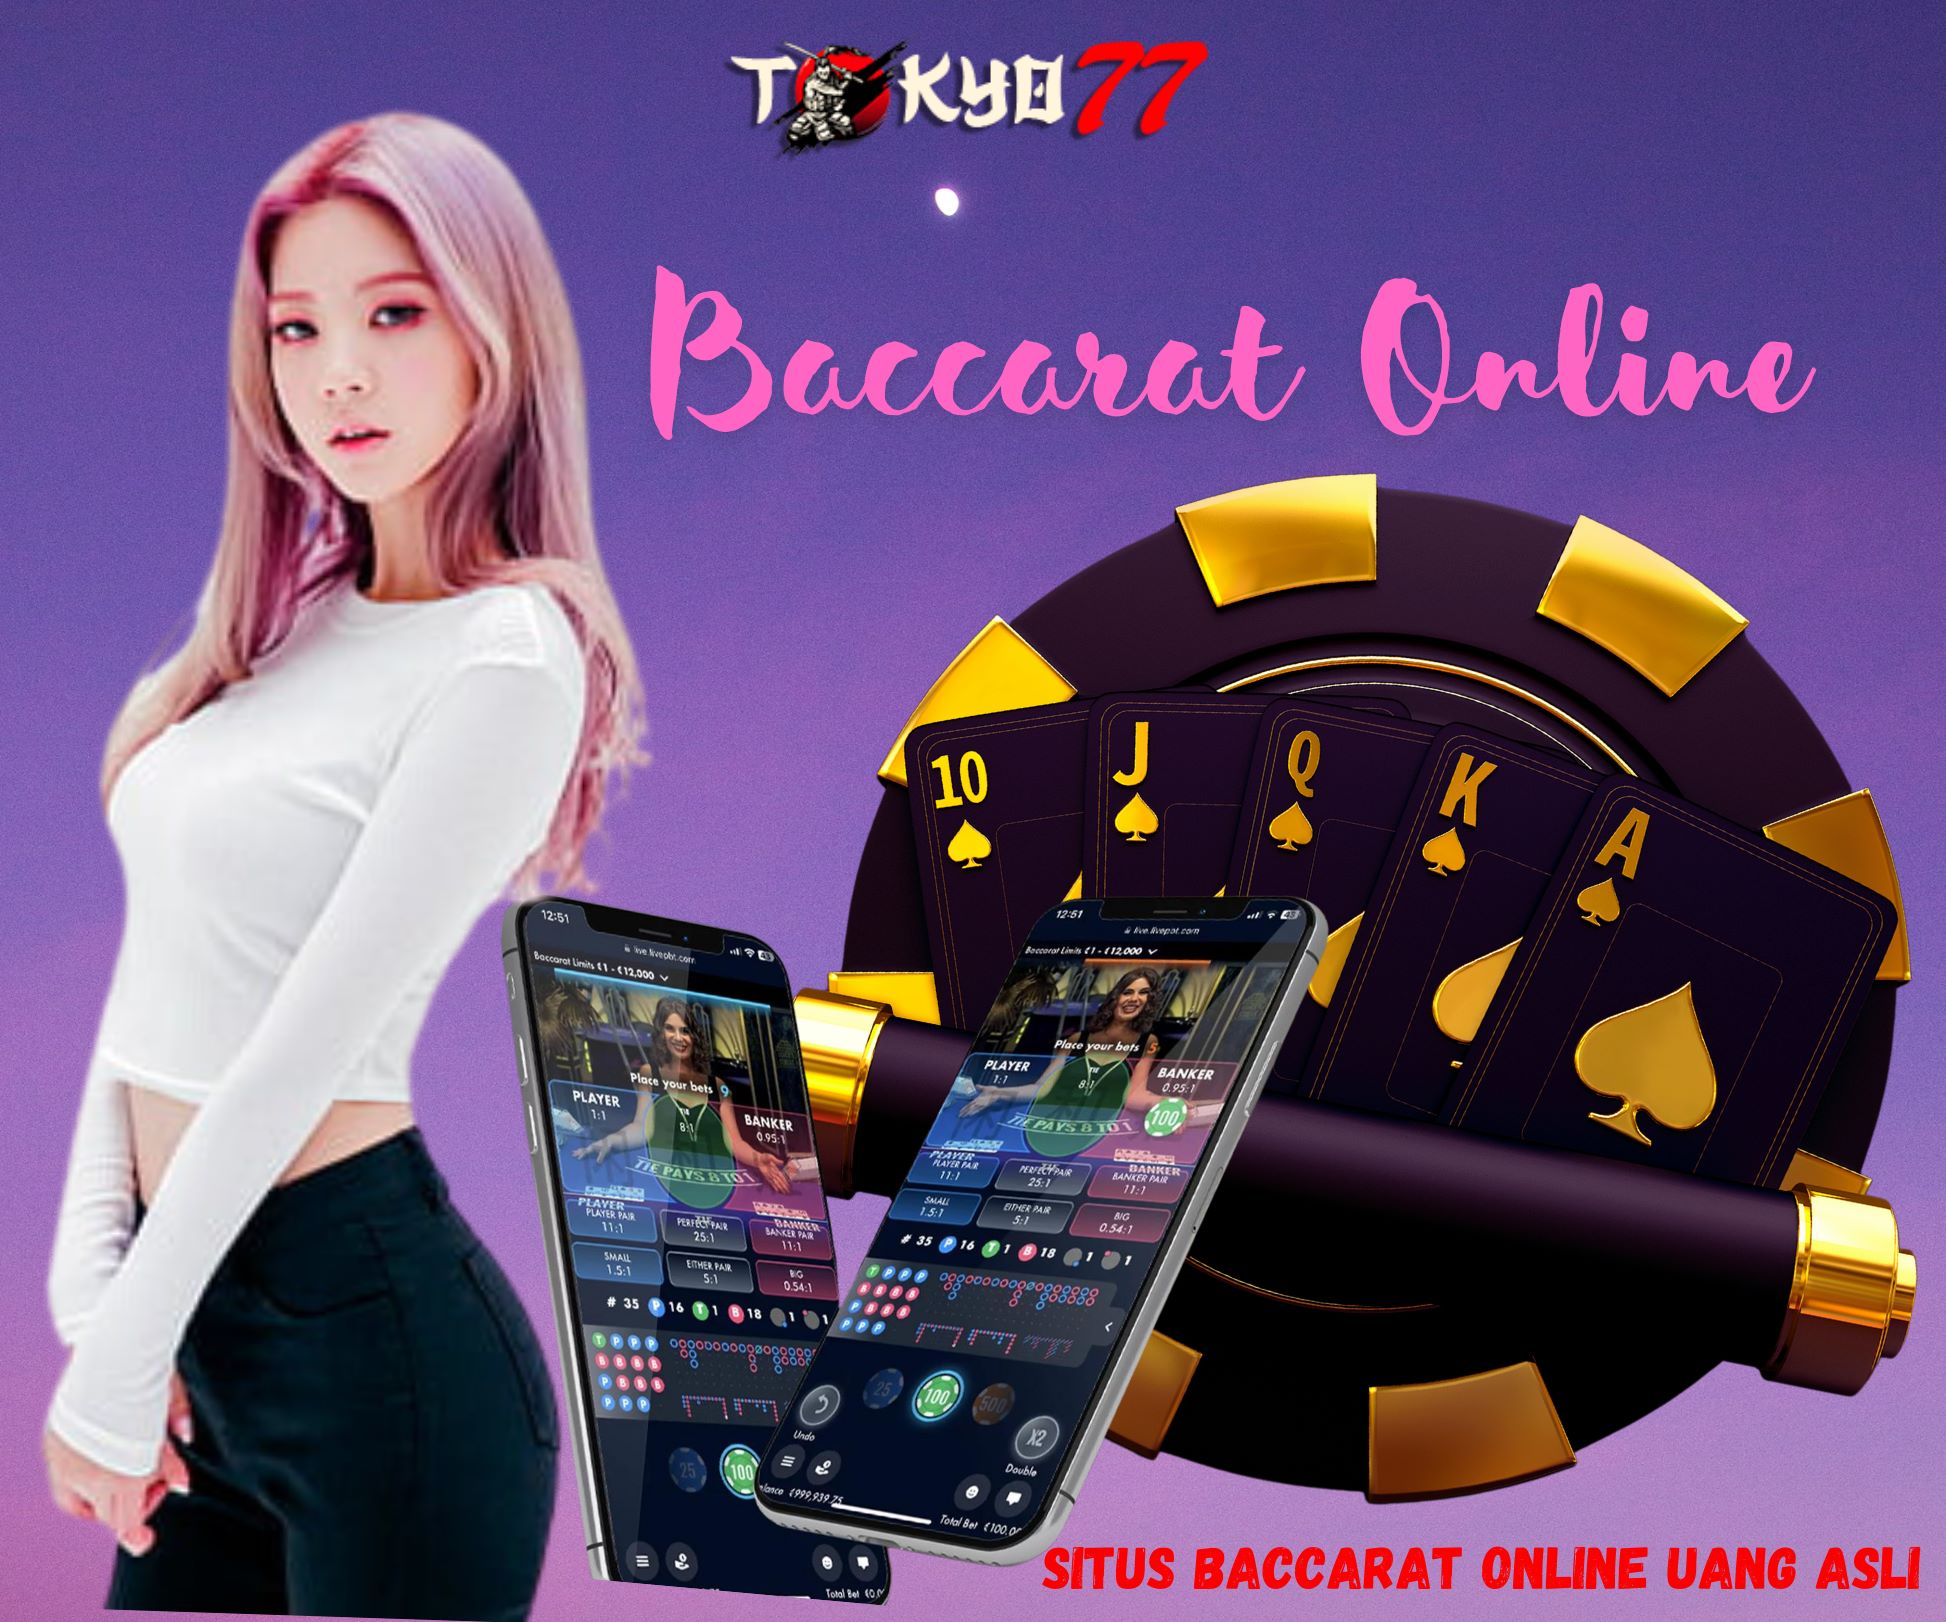 Unlimited Fun in Online Baccarat Gambling